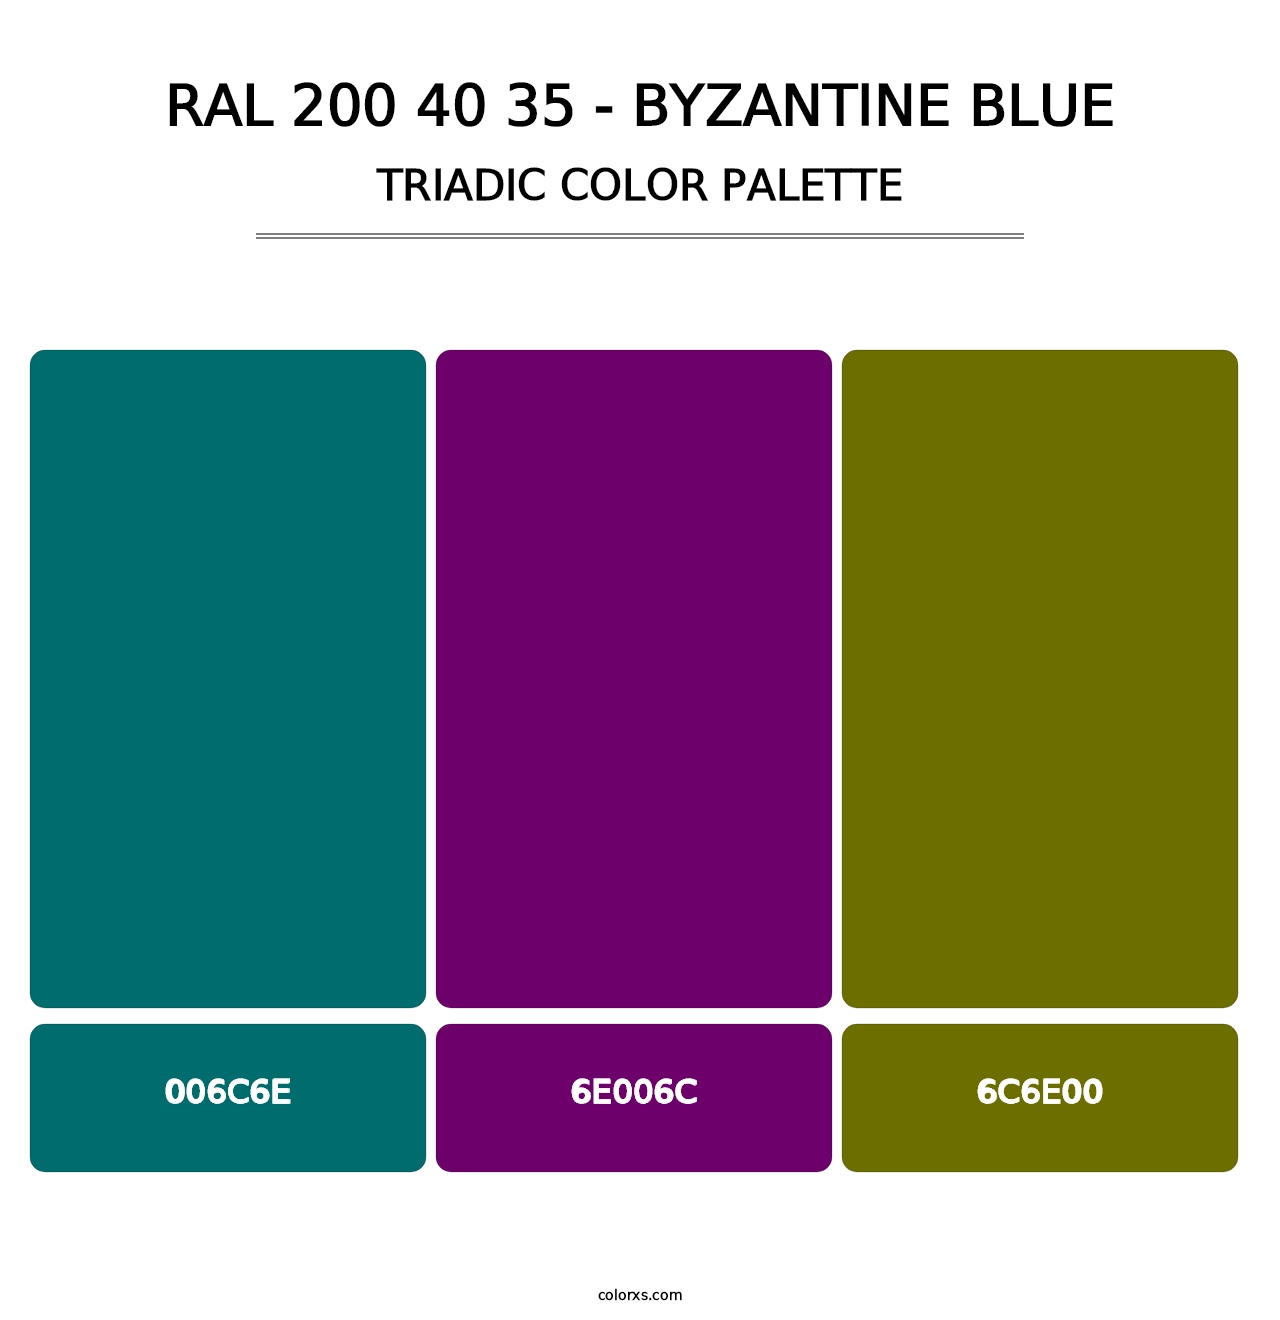 RAL 200 40 35 - Byzantine Blue - Triadic Color Palette